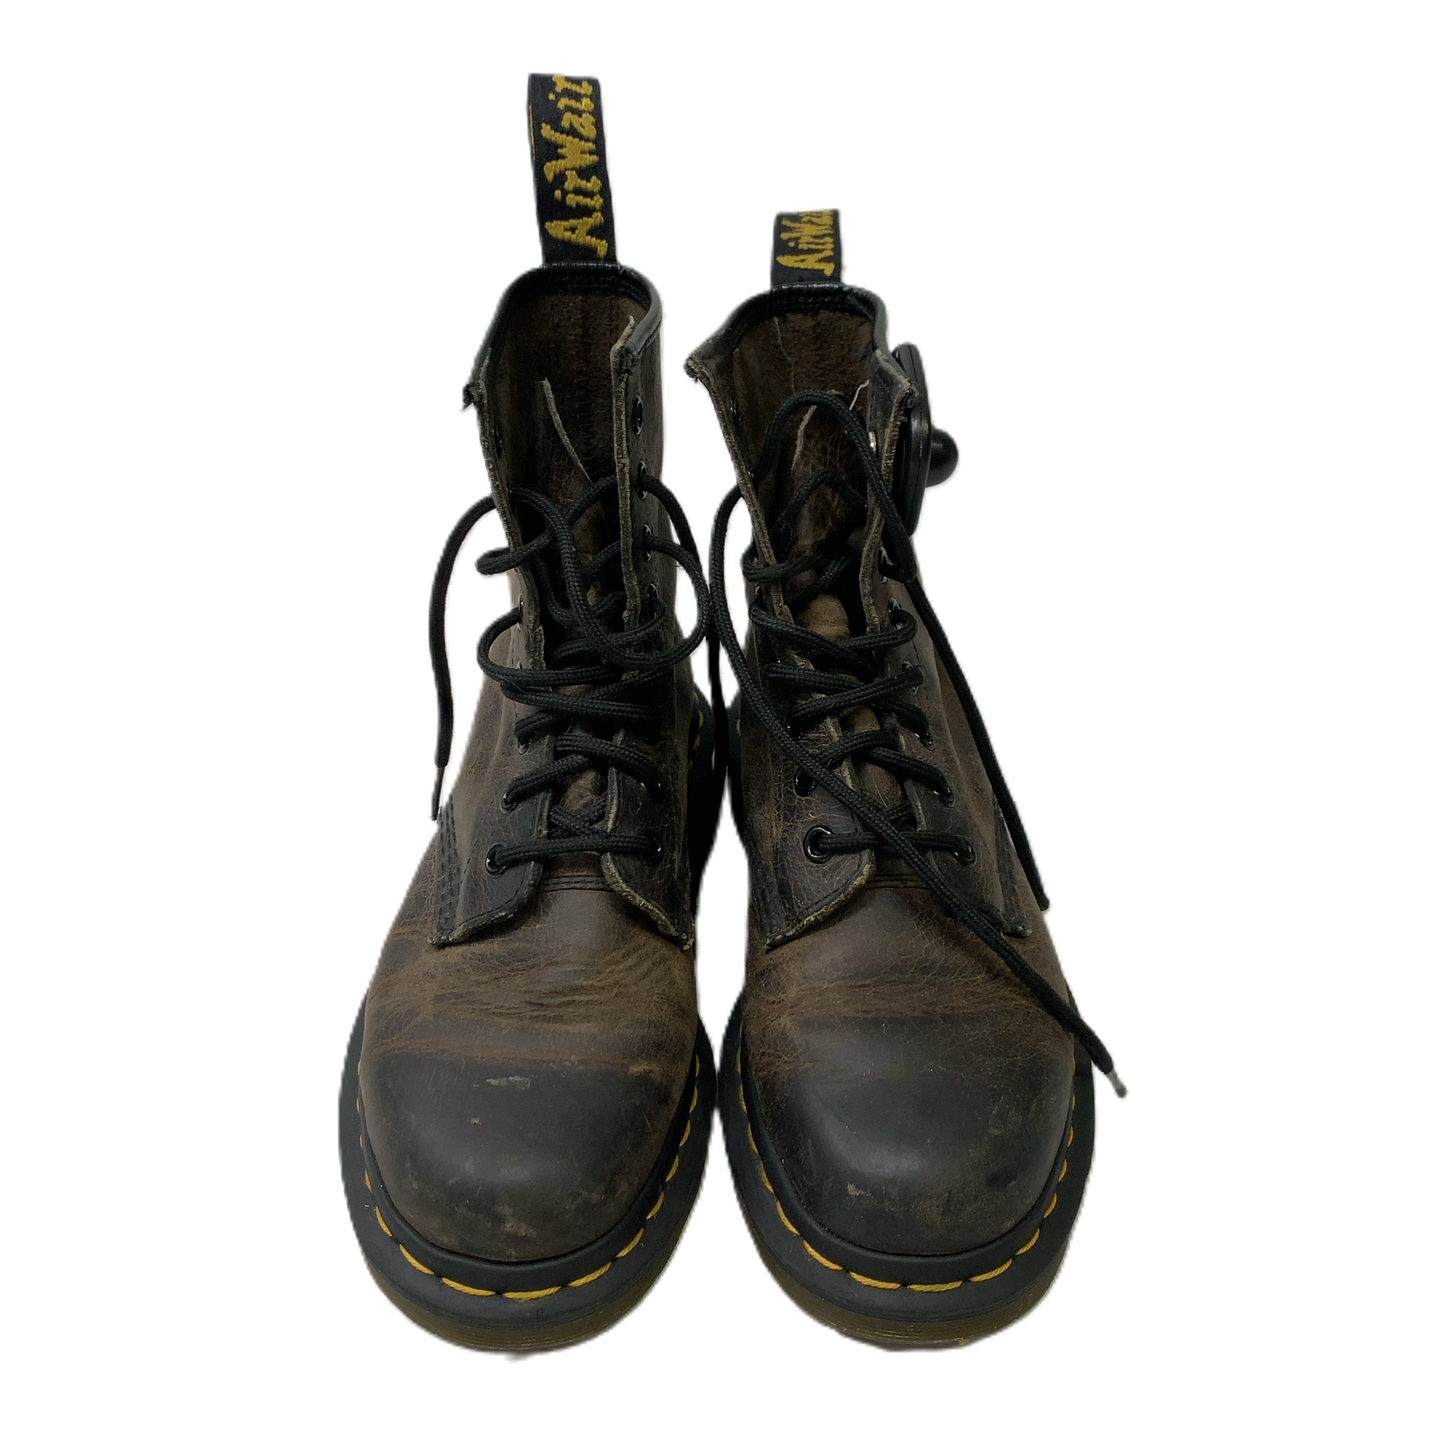 Boots Designer By Dr Martens  Size: 5